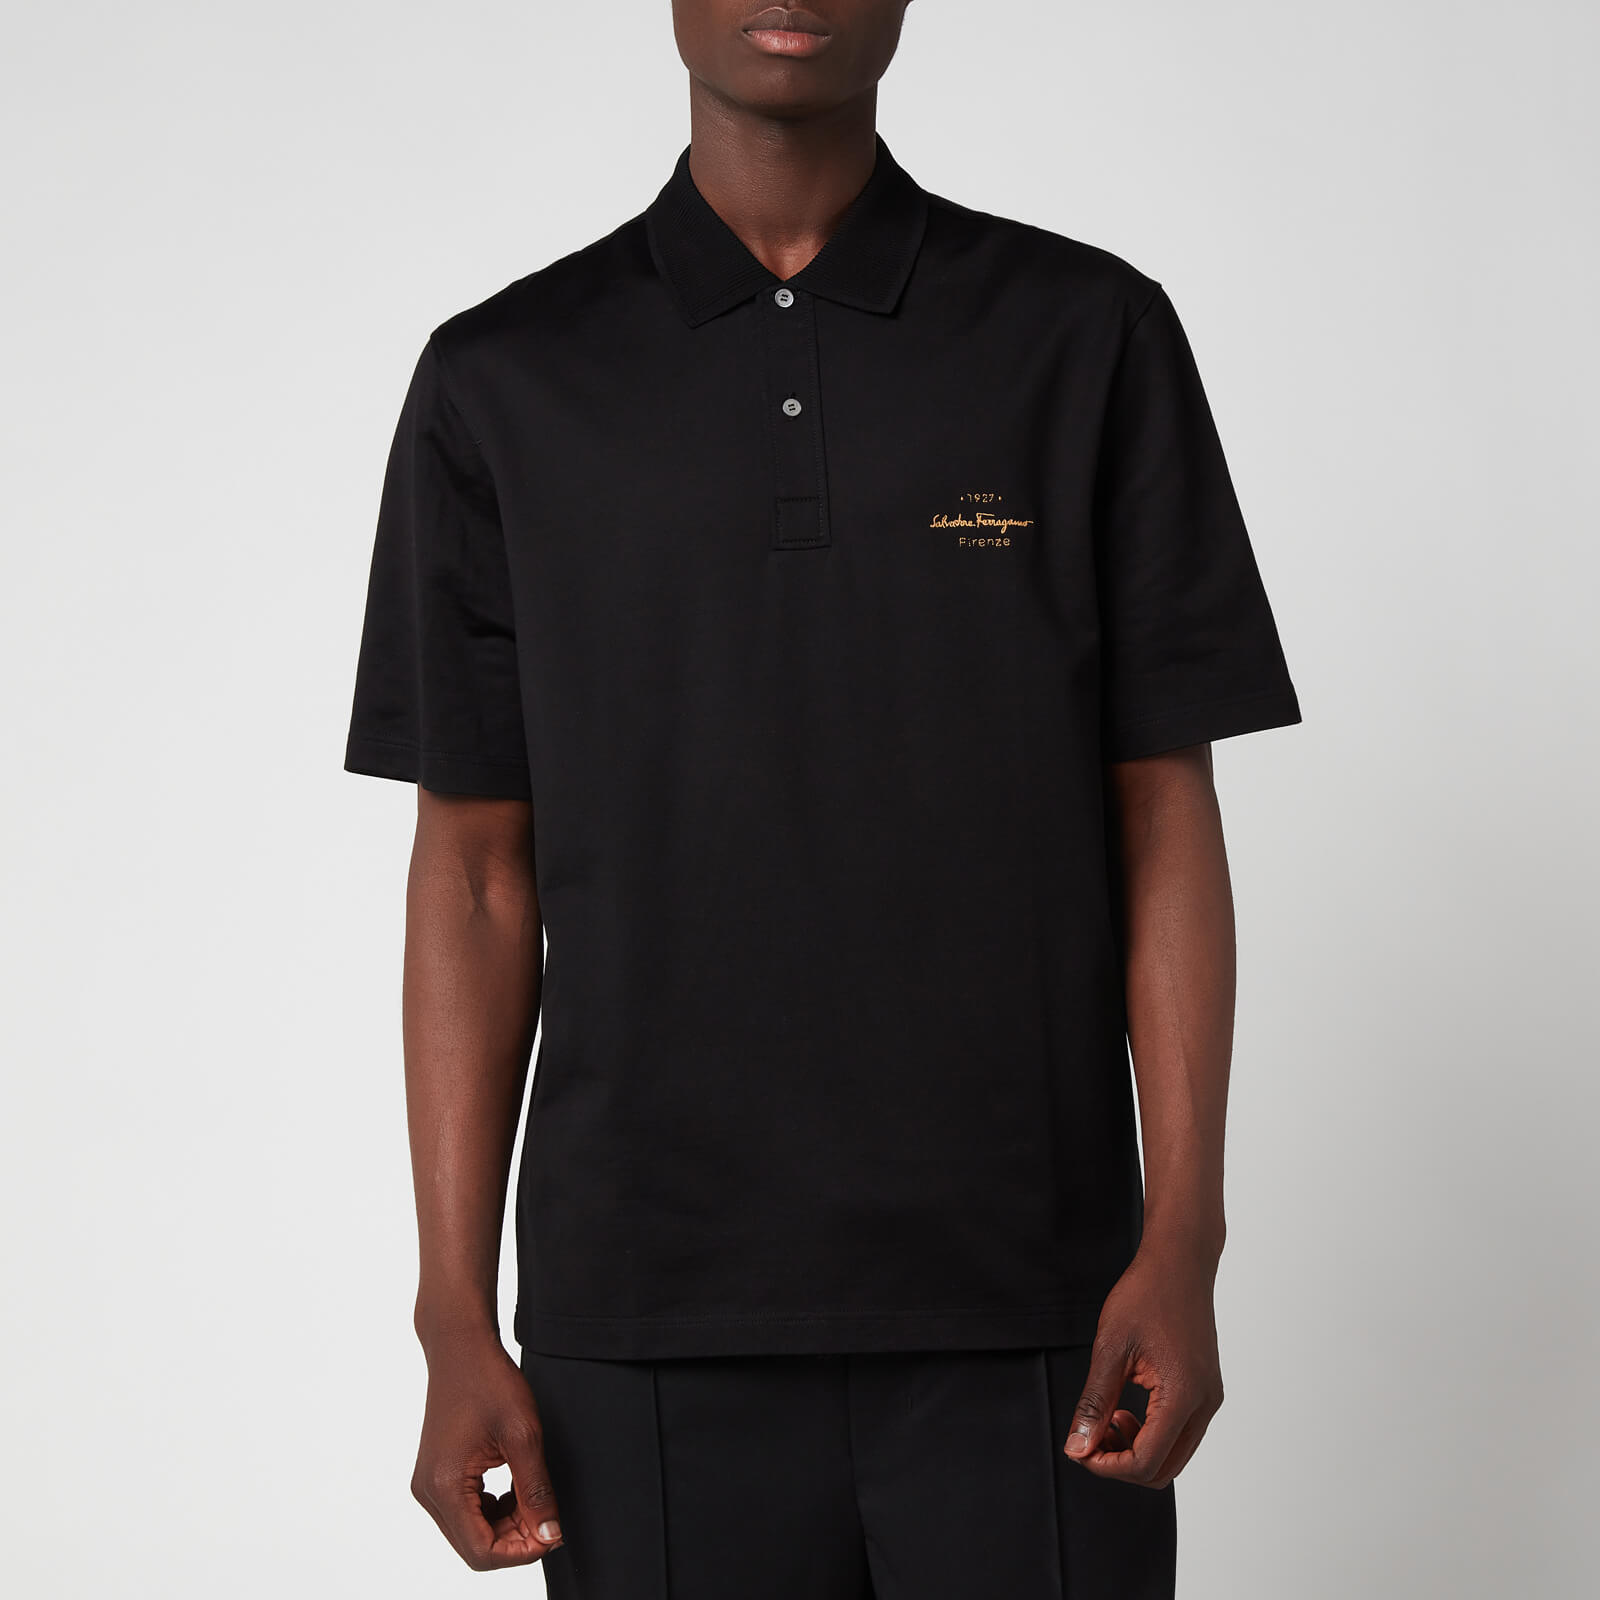 Salvatore Ferragamo Men's Short Sleeve Polo Shirt - Black - L